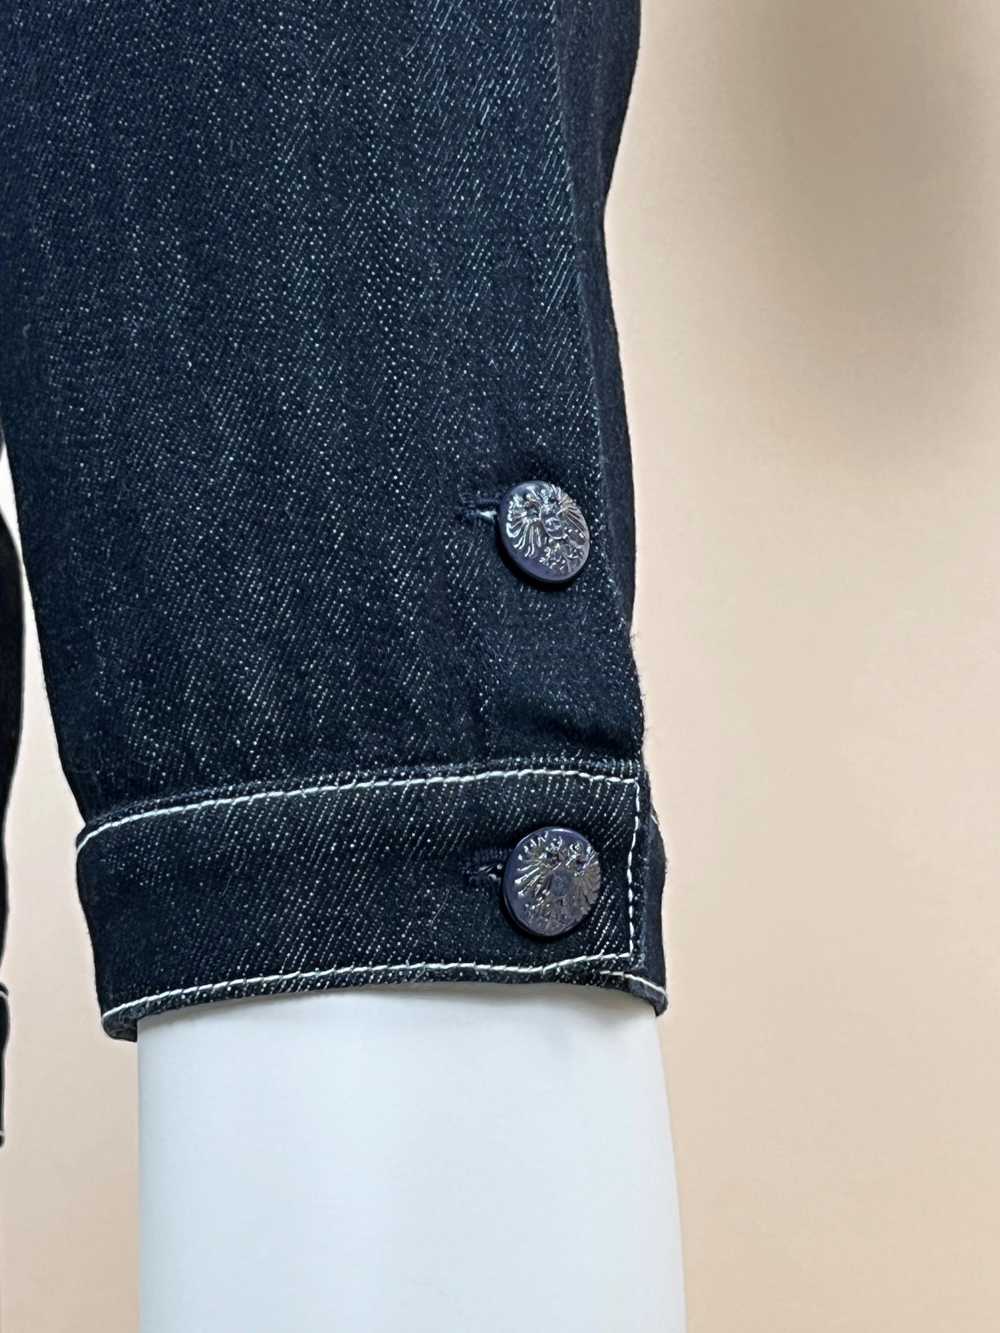 Chanel Paris/Salzburg Embroidered Crop Jeans - image 8